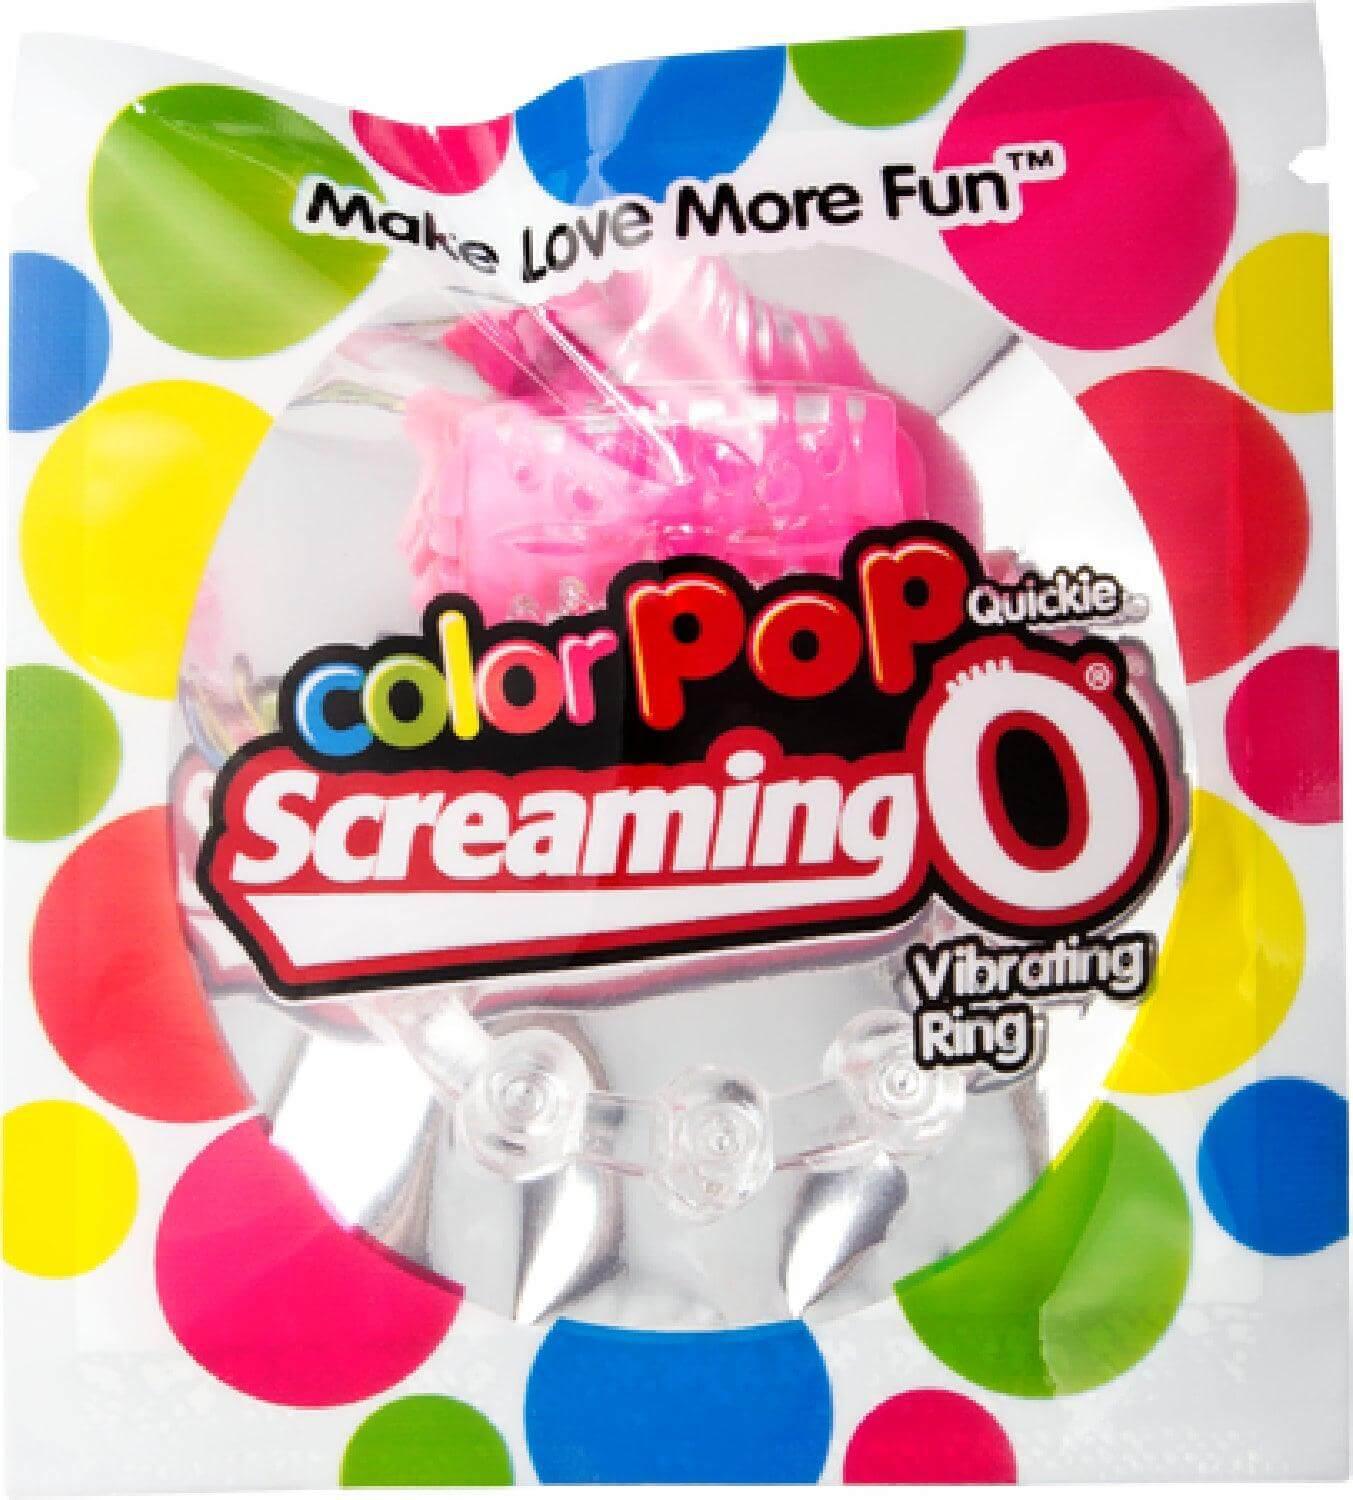 ColorPoP Quickie Screaming O - Take A Peek